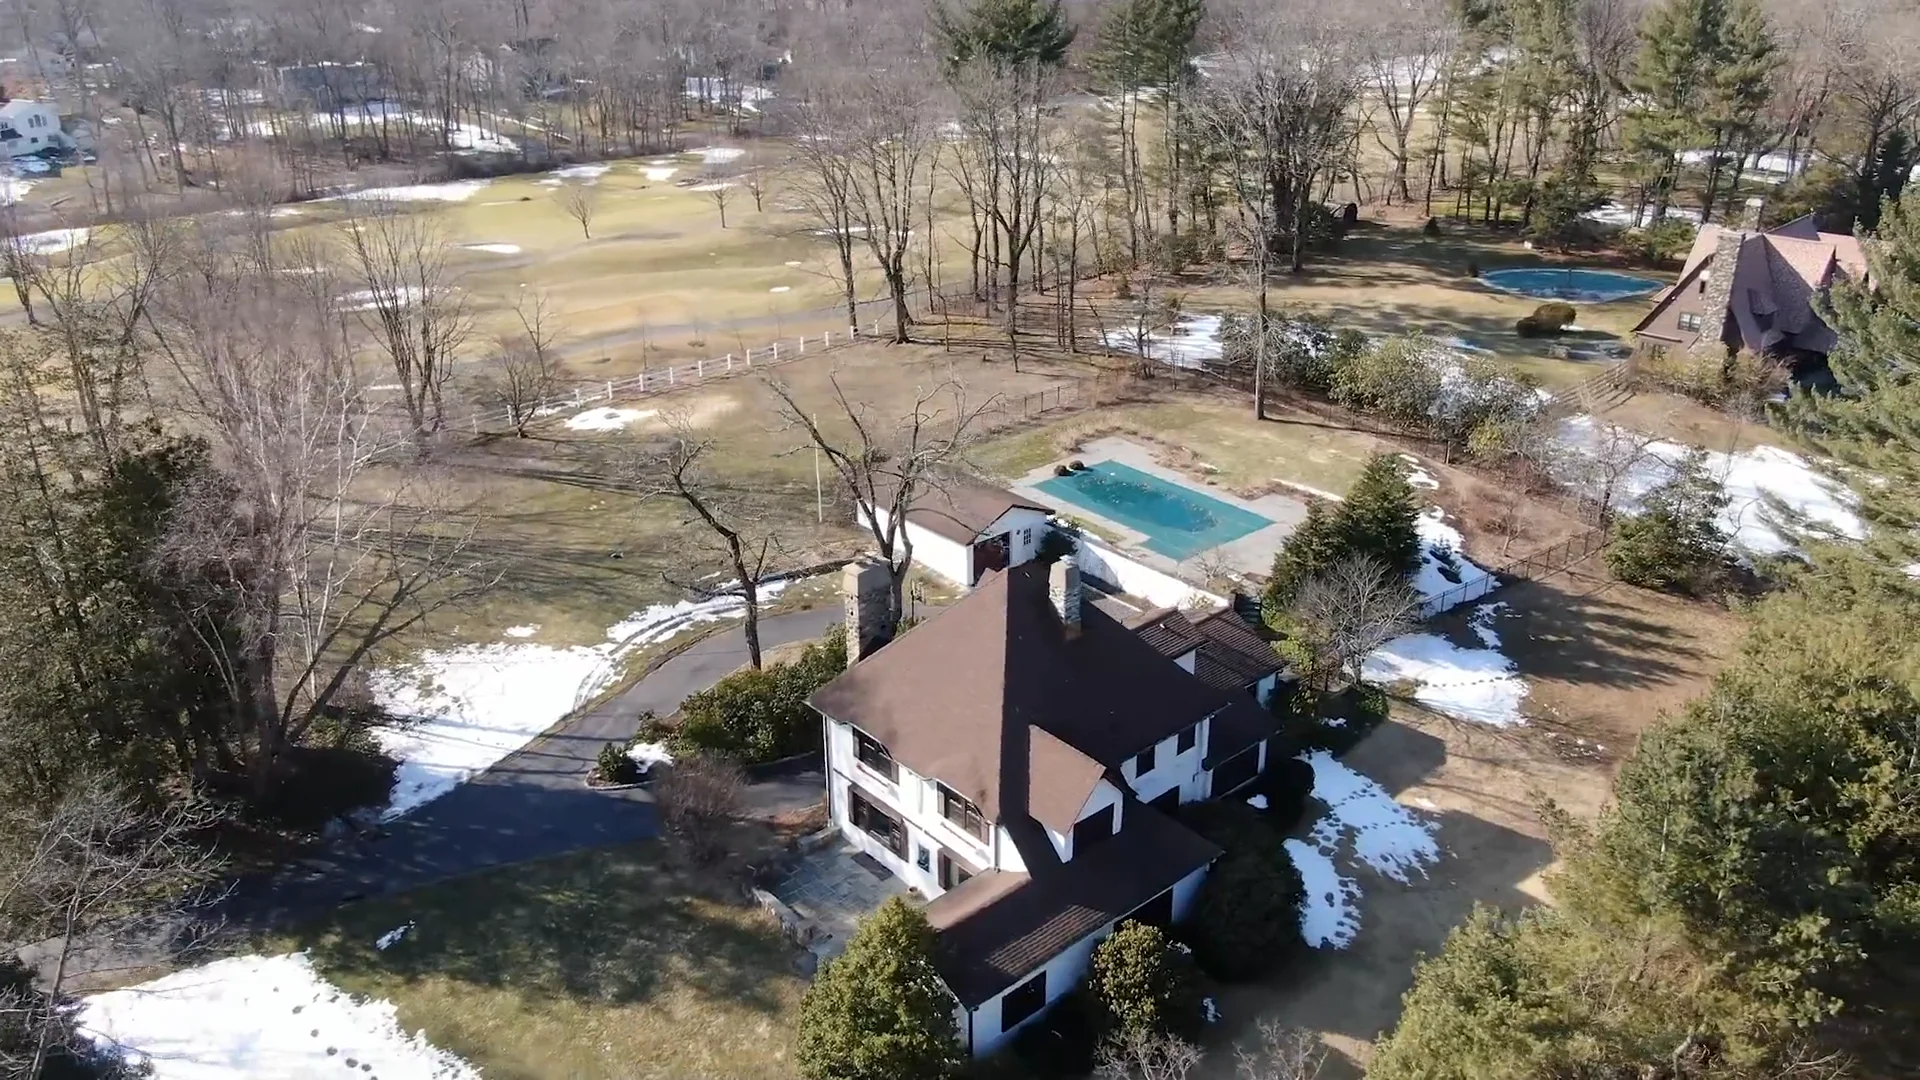 33 Lee Terrace Short Hills, NJ on Vimeo